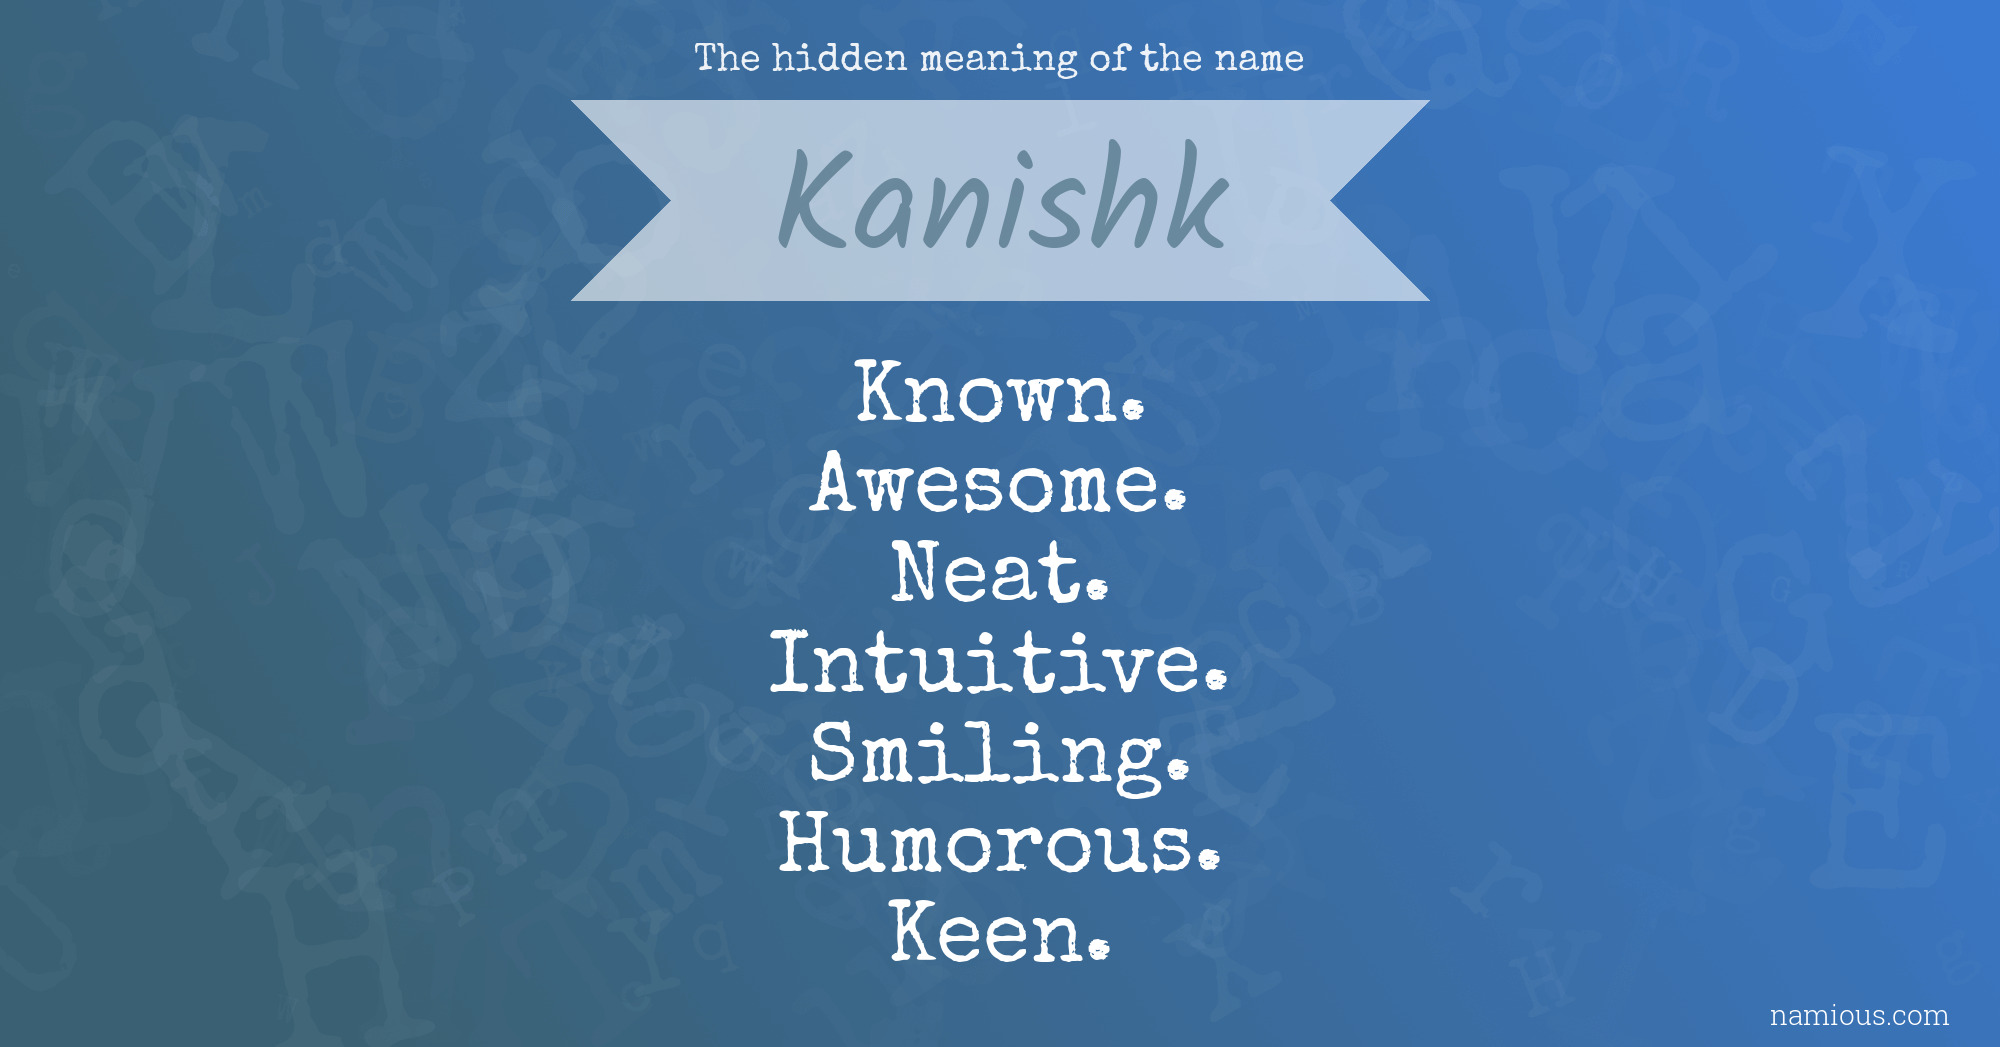 The hidden meaning of the name Kanishk